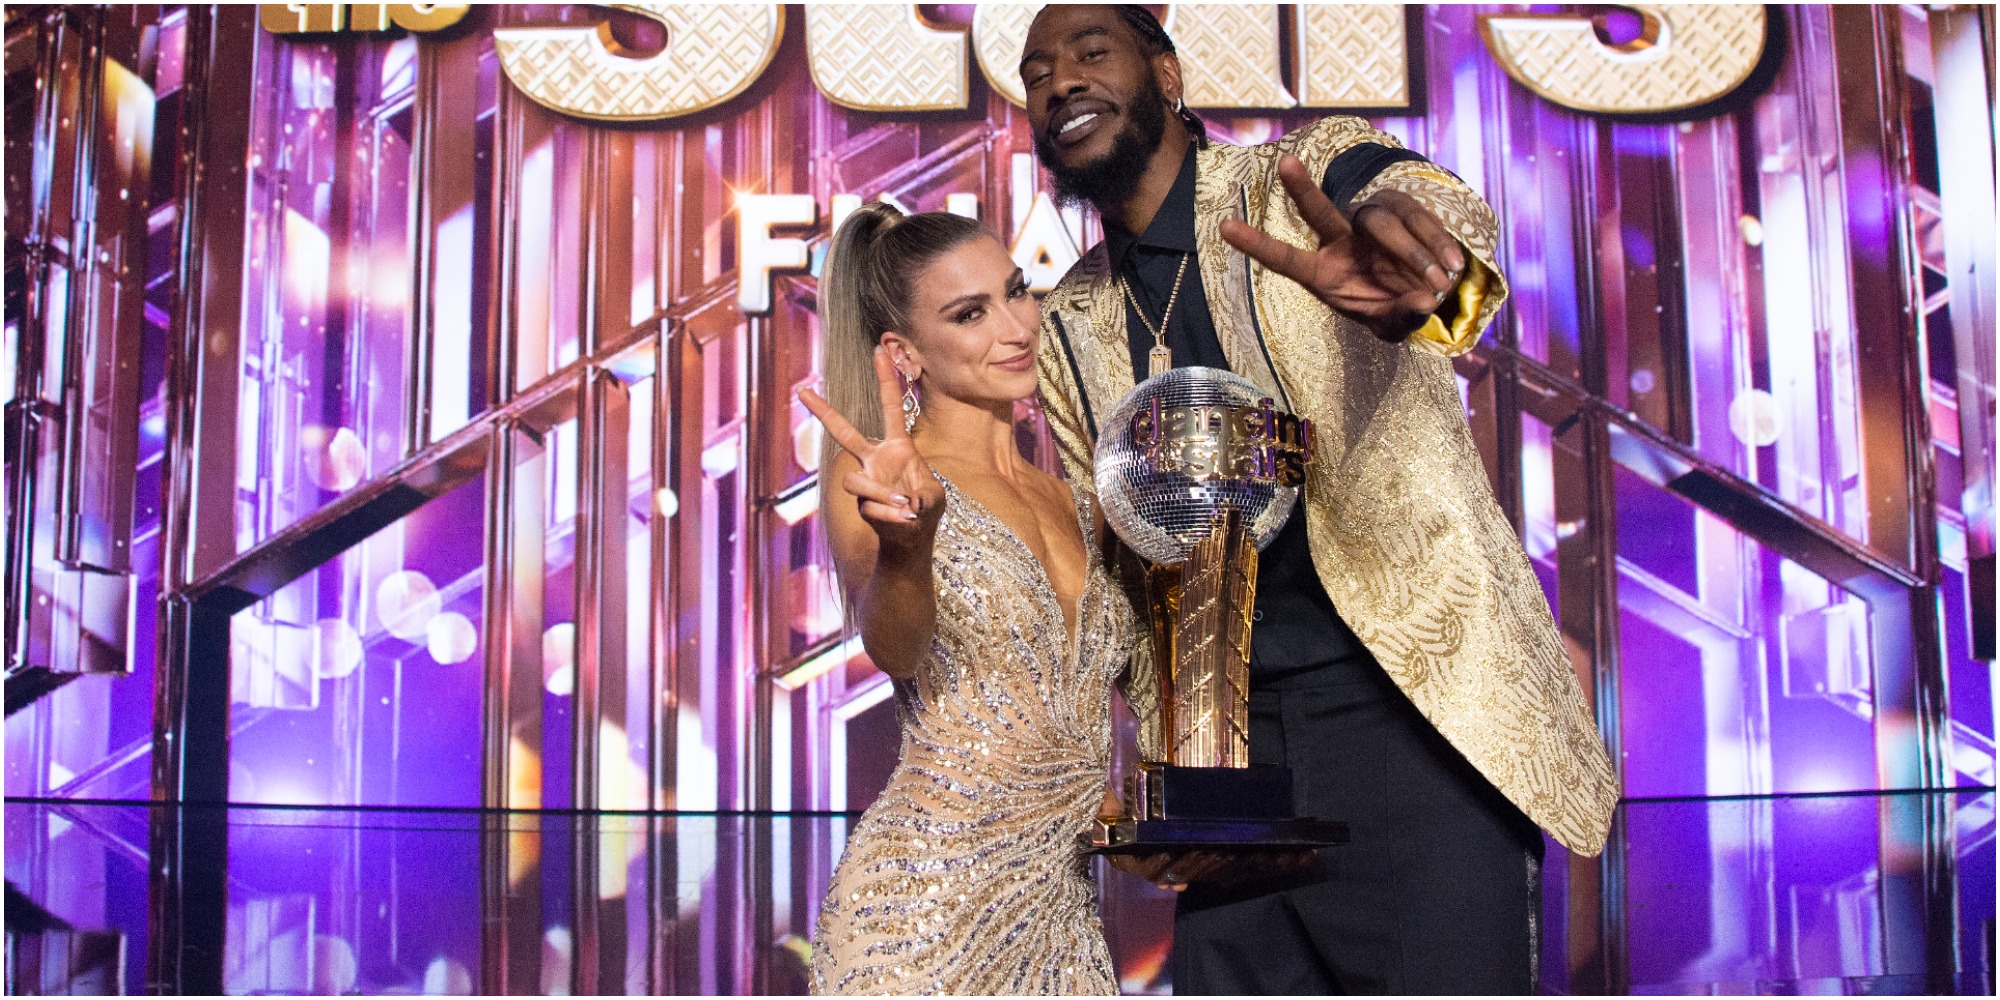 Daniella Karagach and Iman Shumpert were the winners of season 30 of Dancing with the Stars.